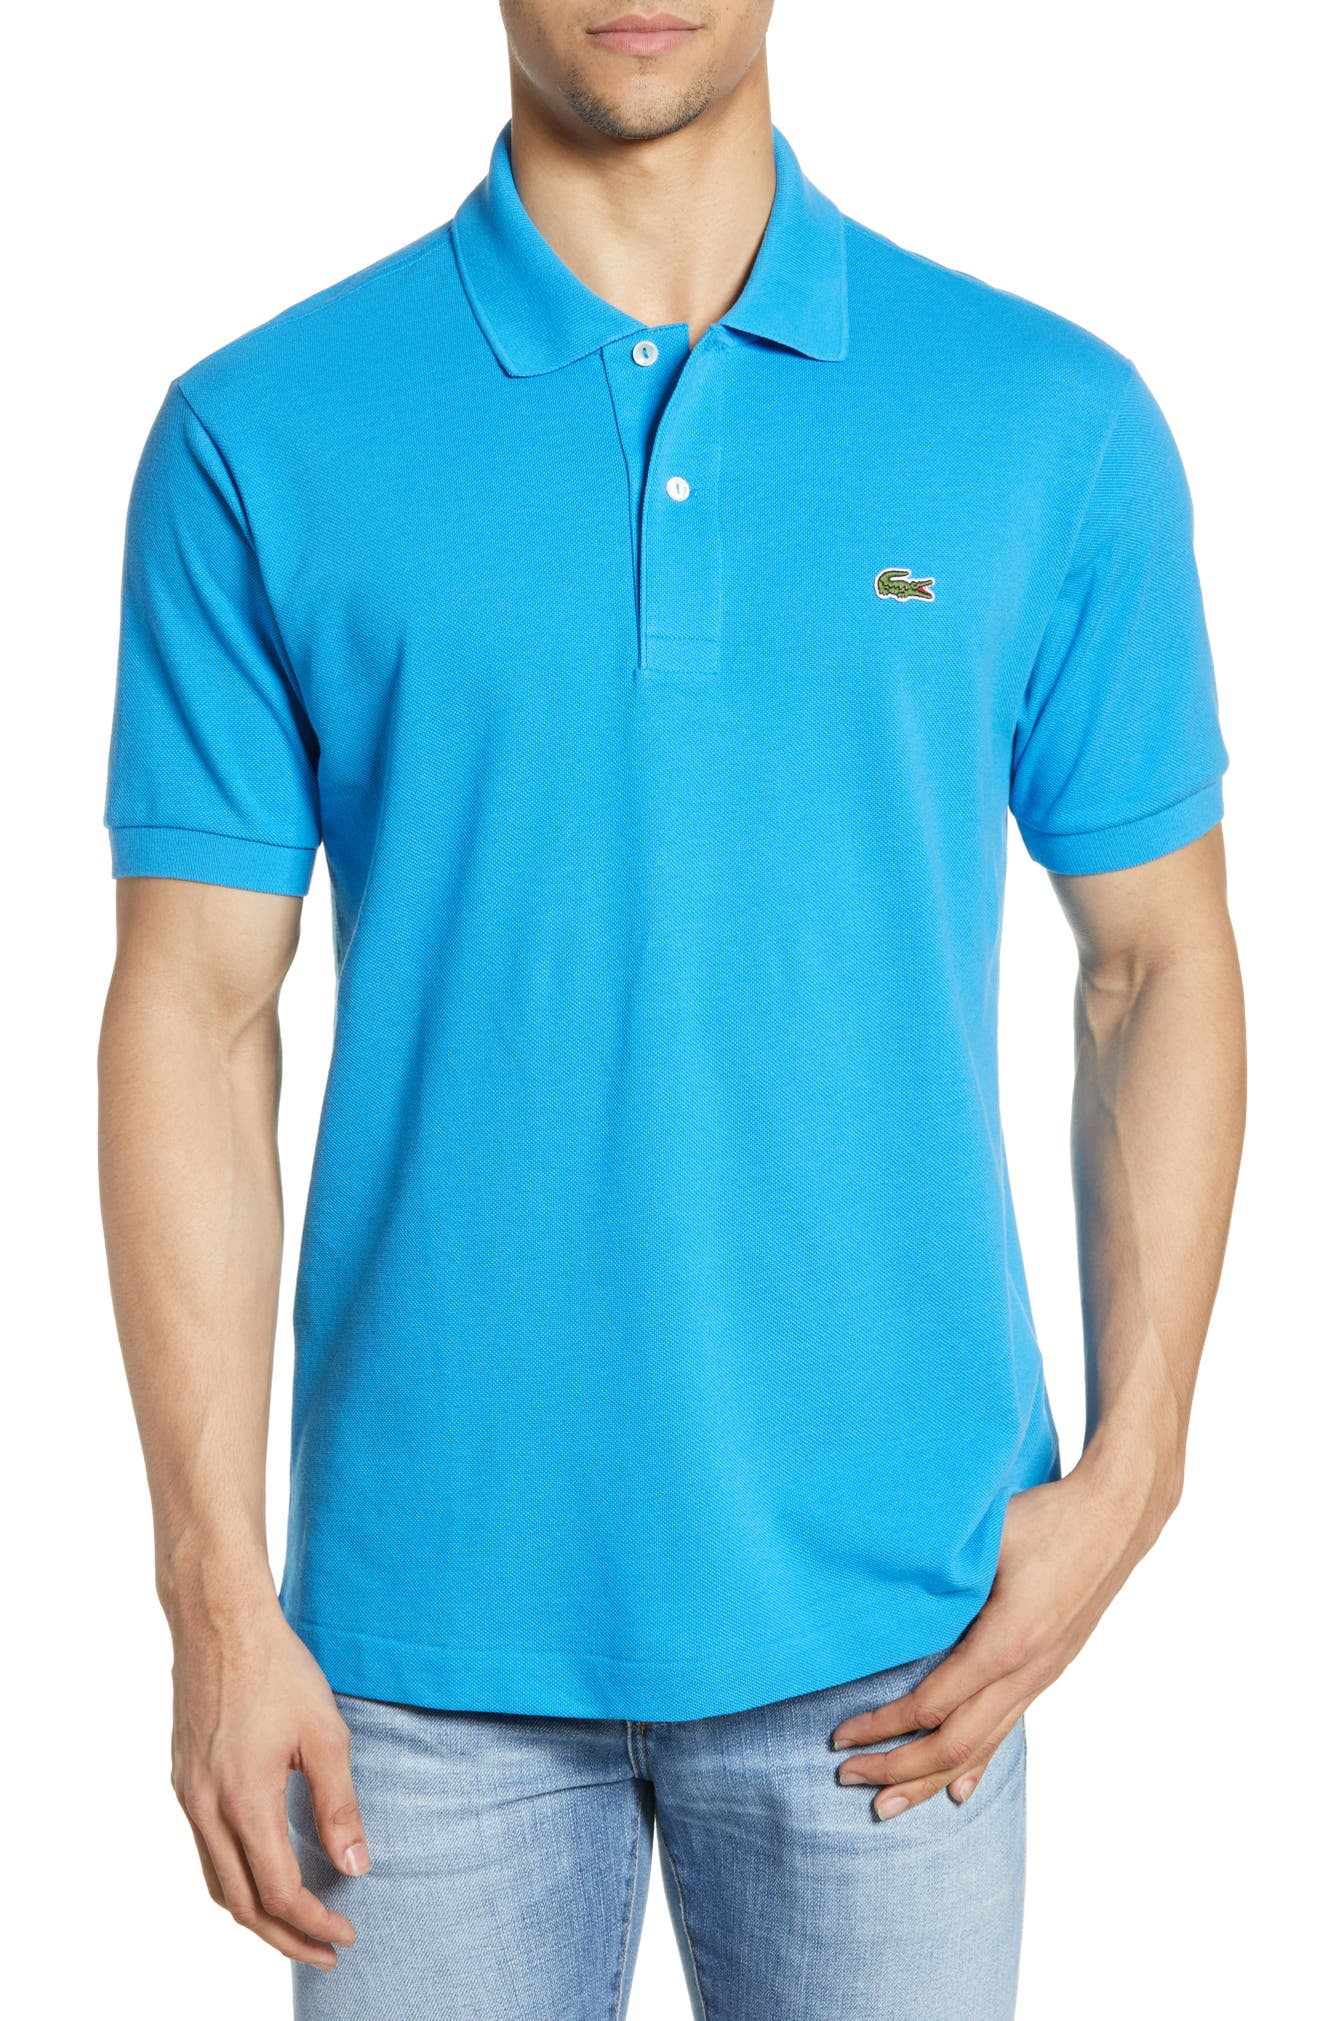 Lacoste IBIZA Short Sleeve Classic Pique Polo Shirt, US Small -